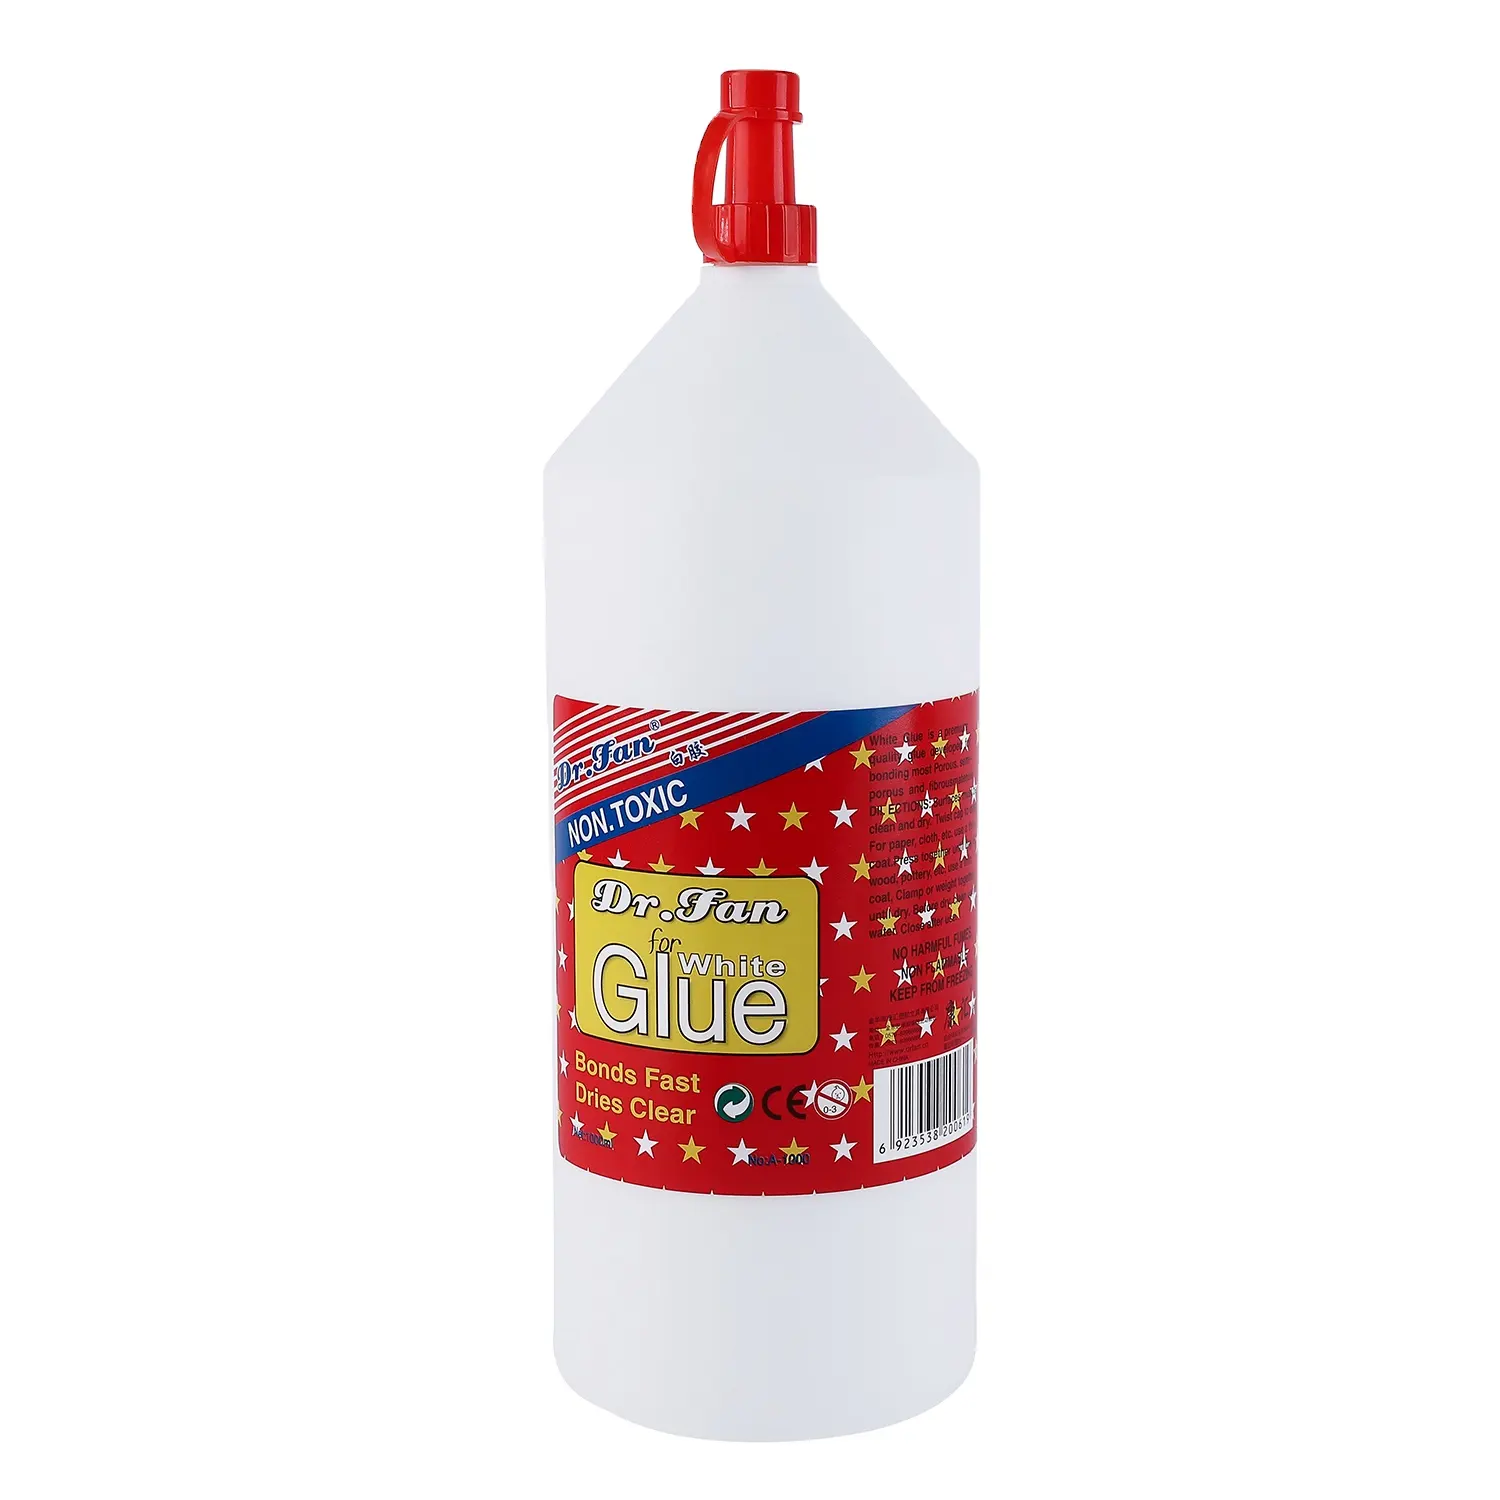 Activator bee 3d accesorios de blueberry PVA glue white glue for making slime gallon school girl